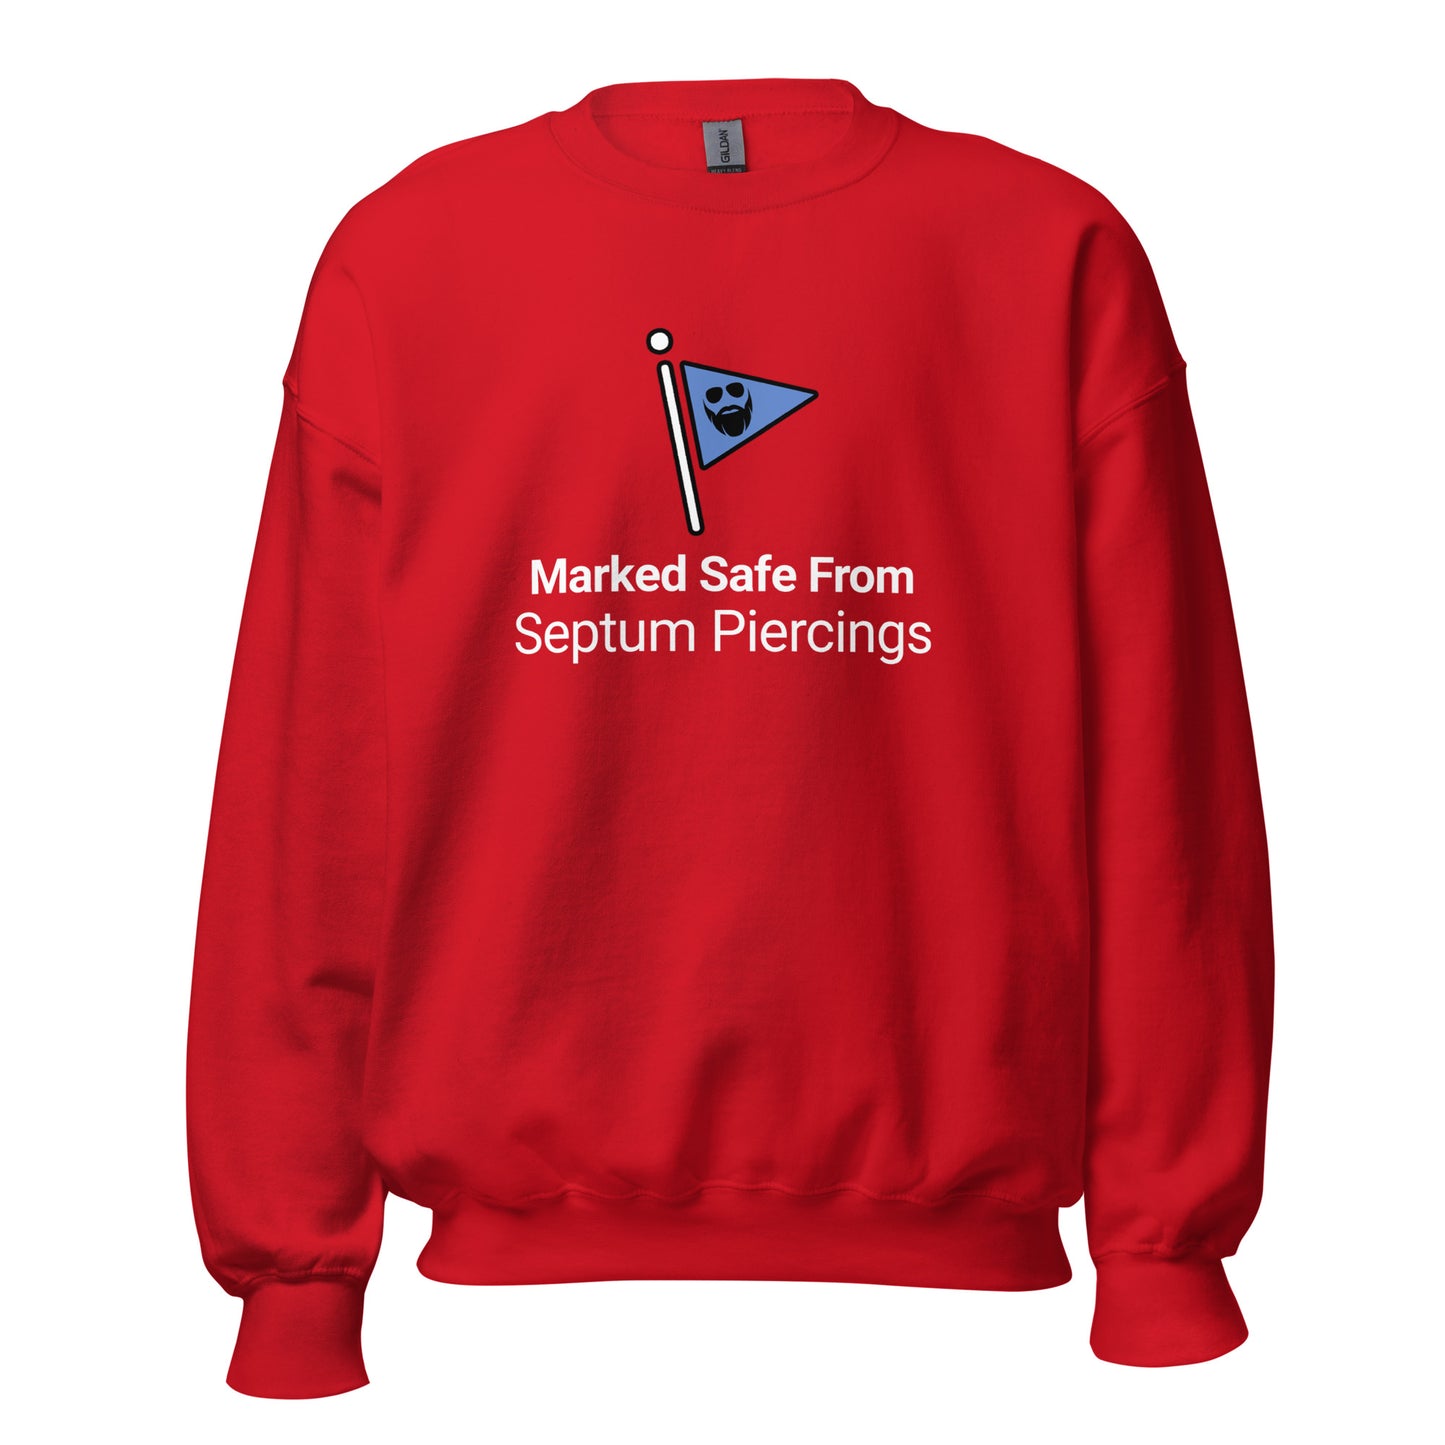 Marked Safe From Septum Piercings Sweatshirt